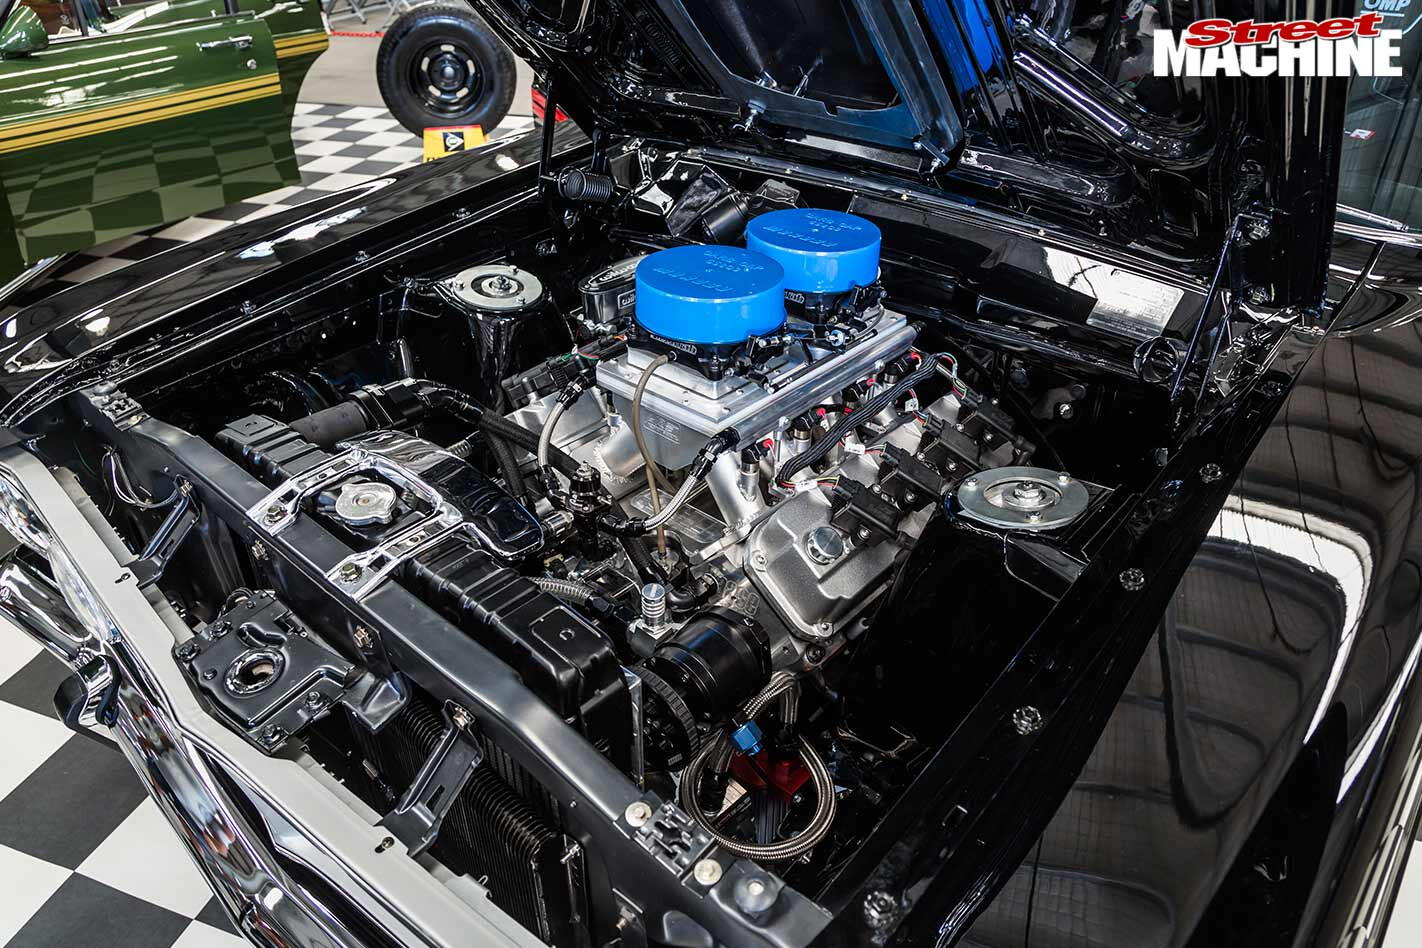 Ford Falcon XY GT engine bay